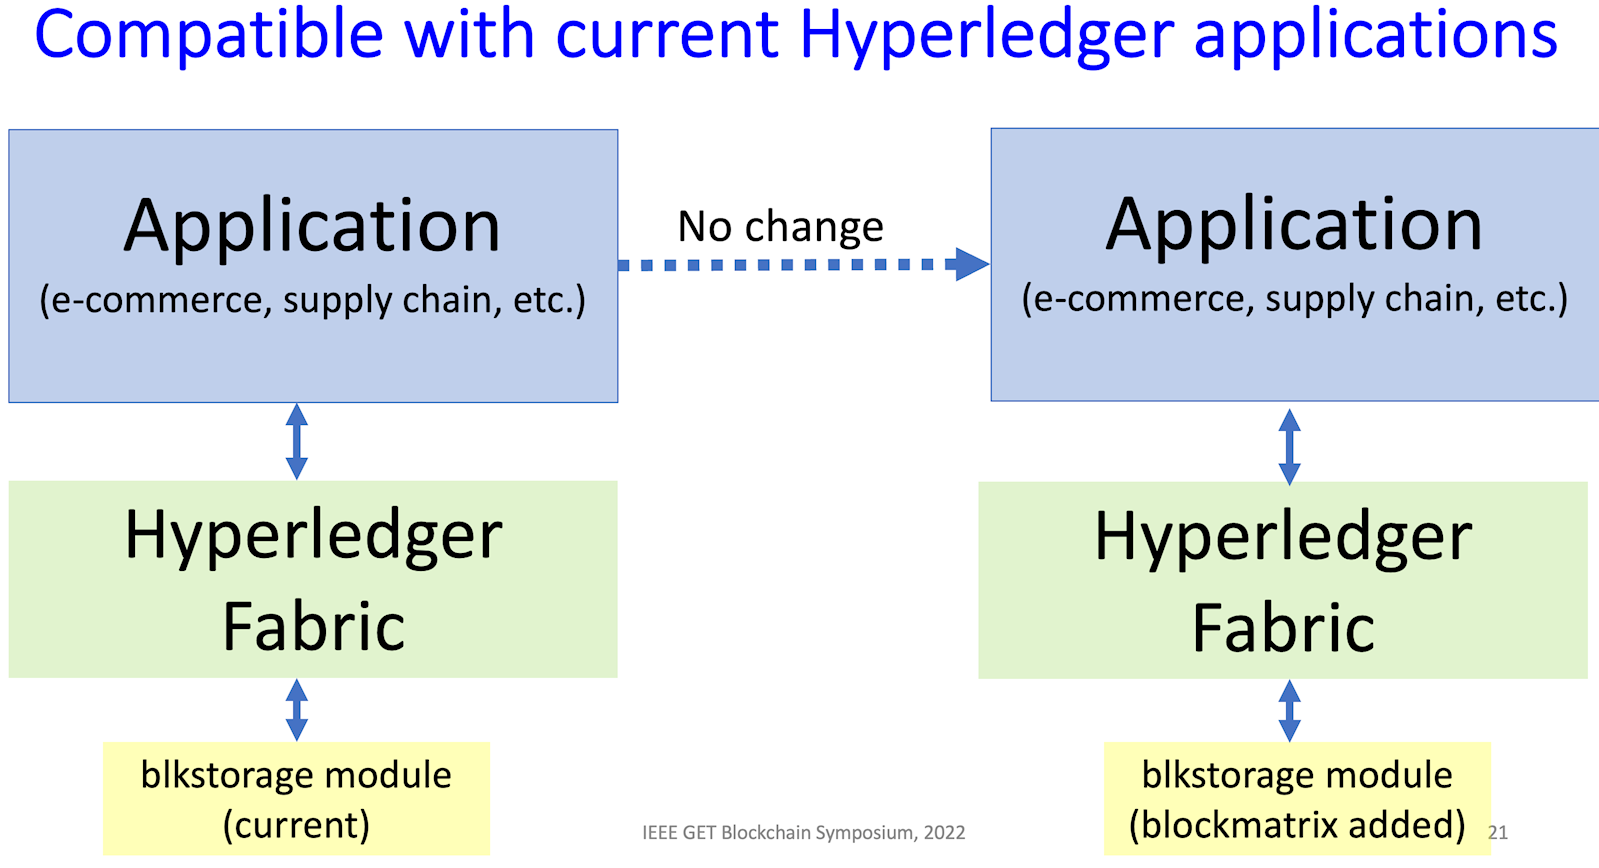 Hyperledger data block matrix